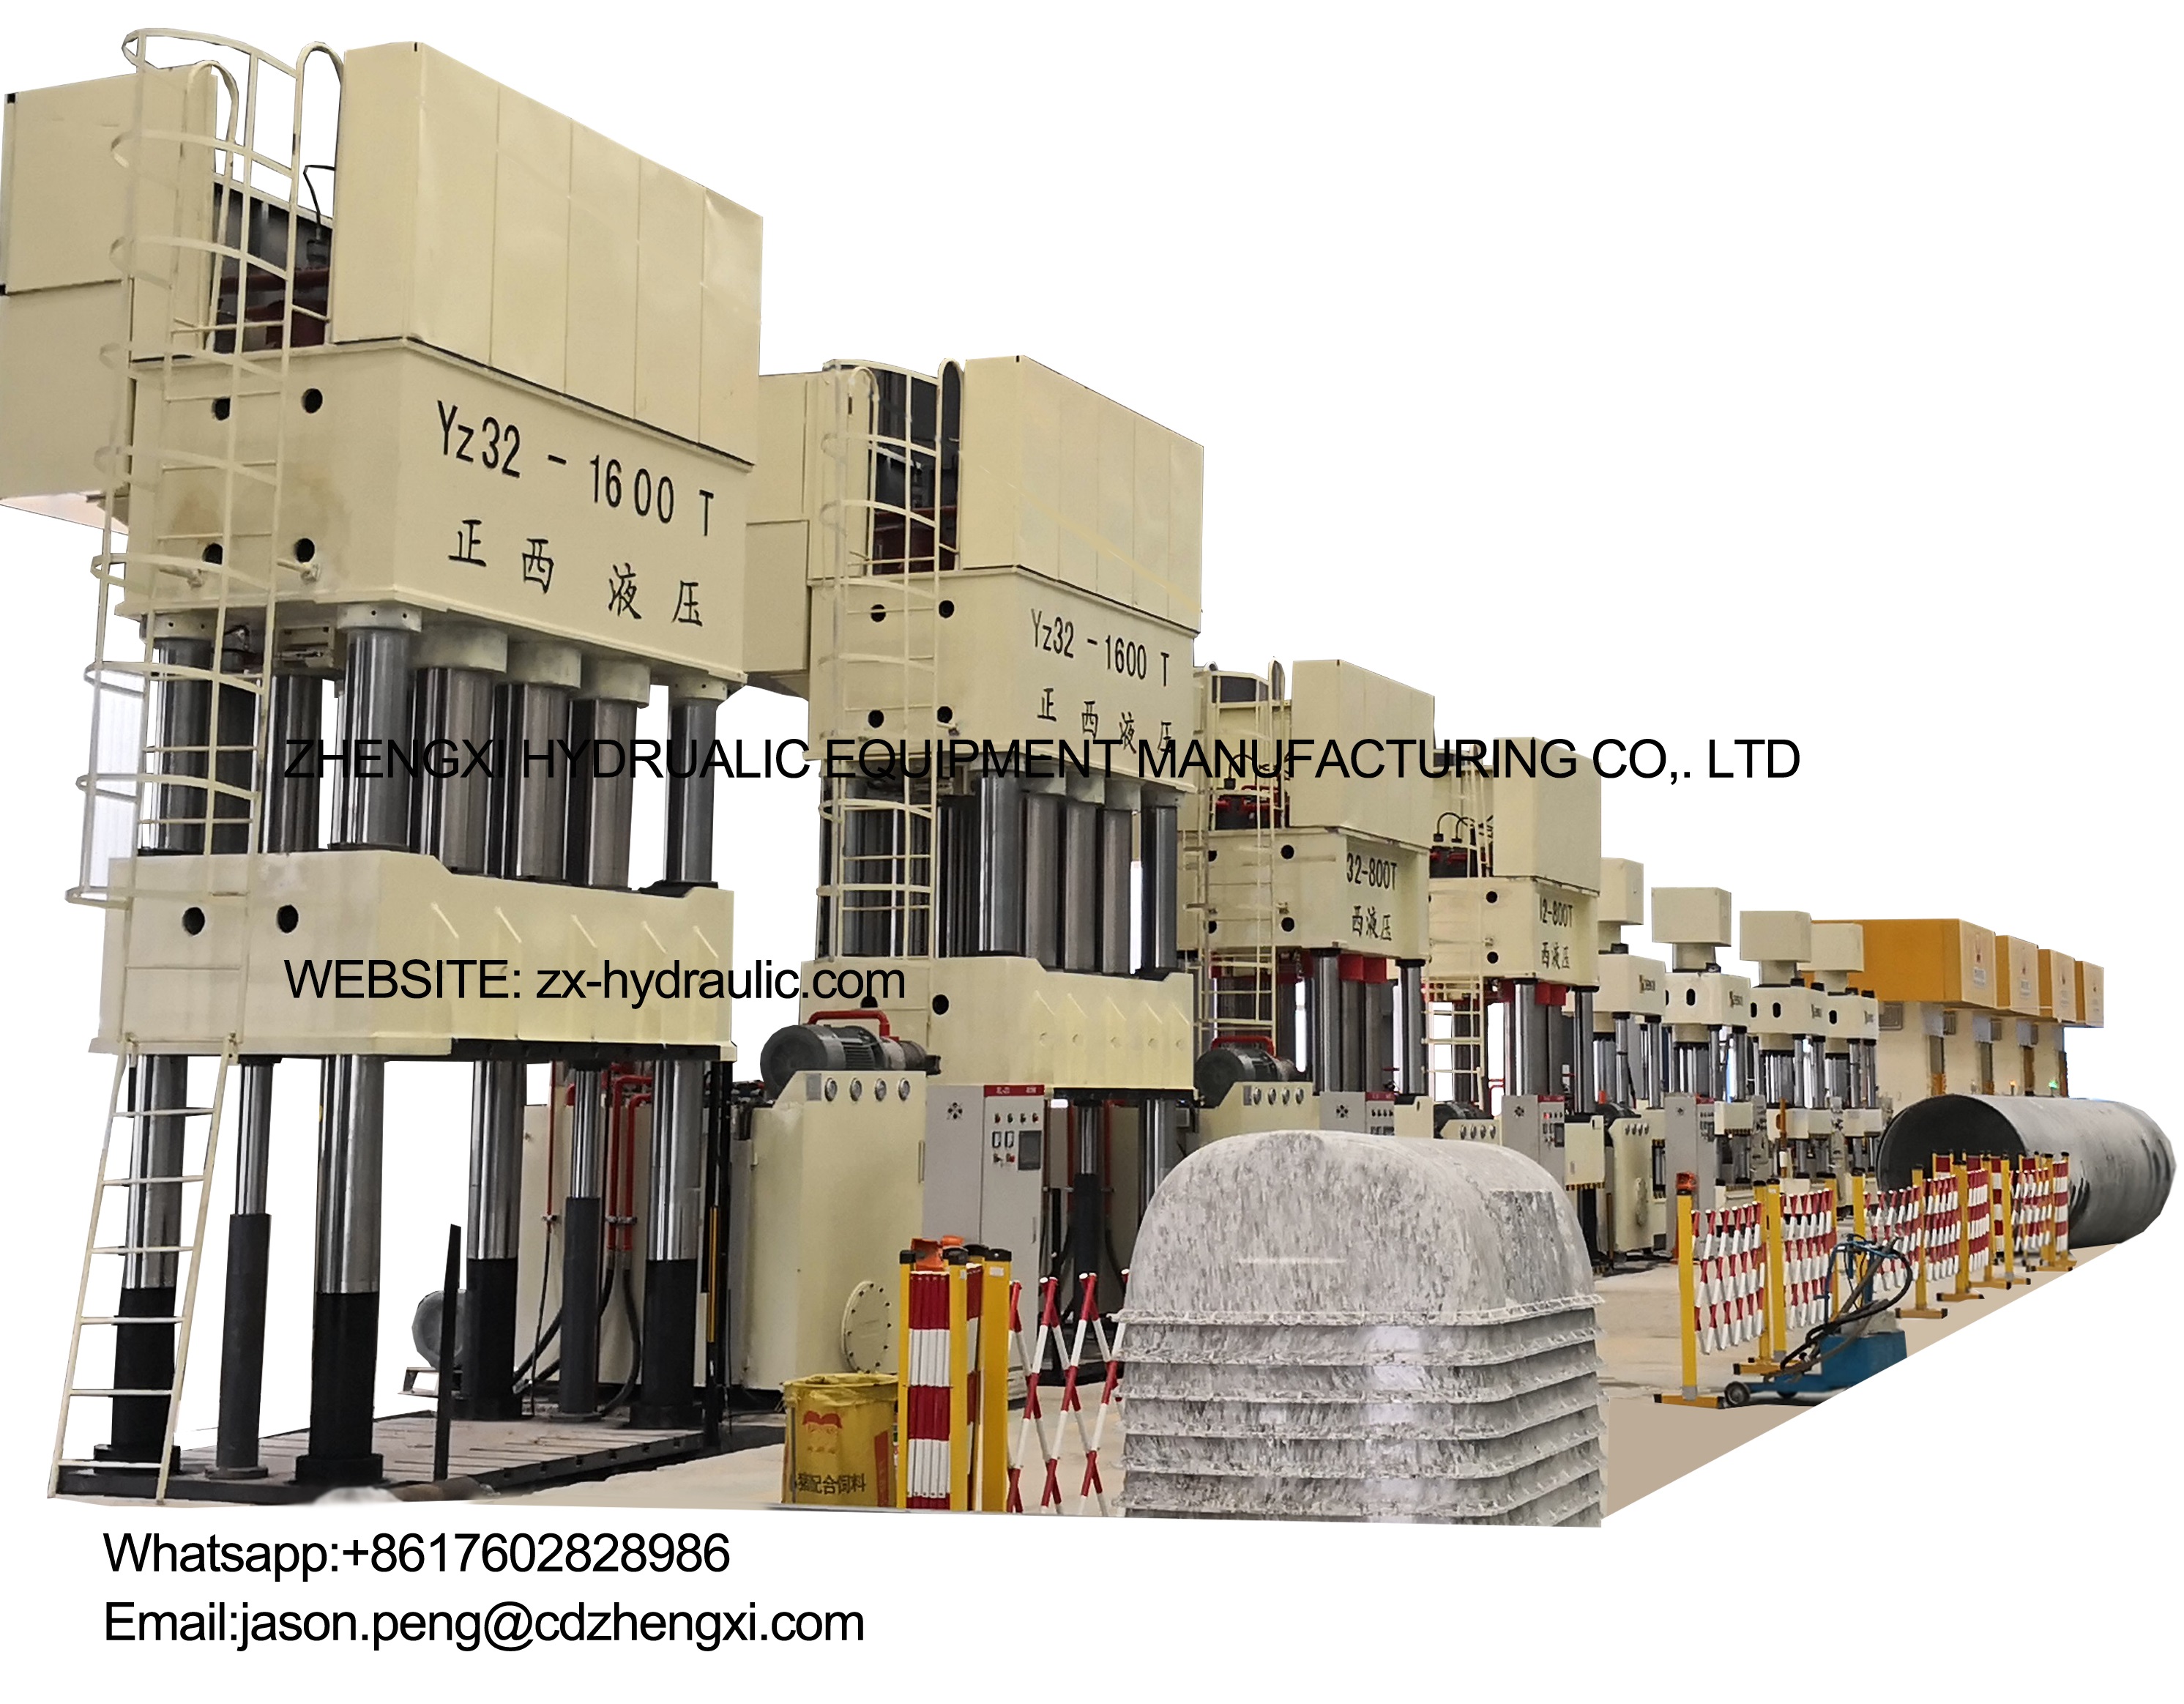 Hydraulic Press Machine Production Line